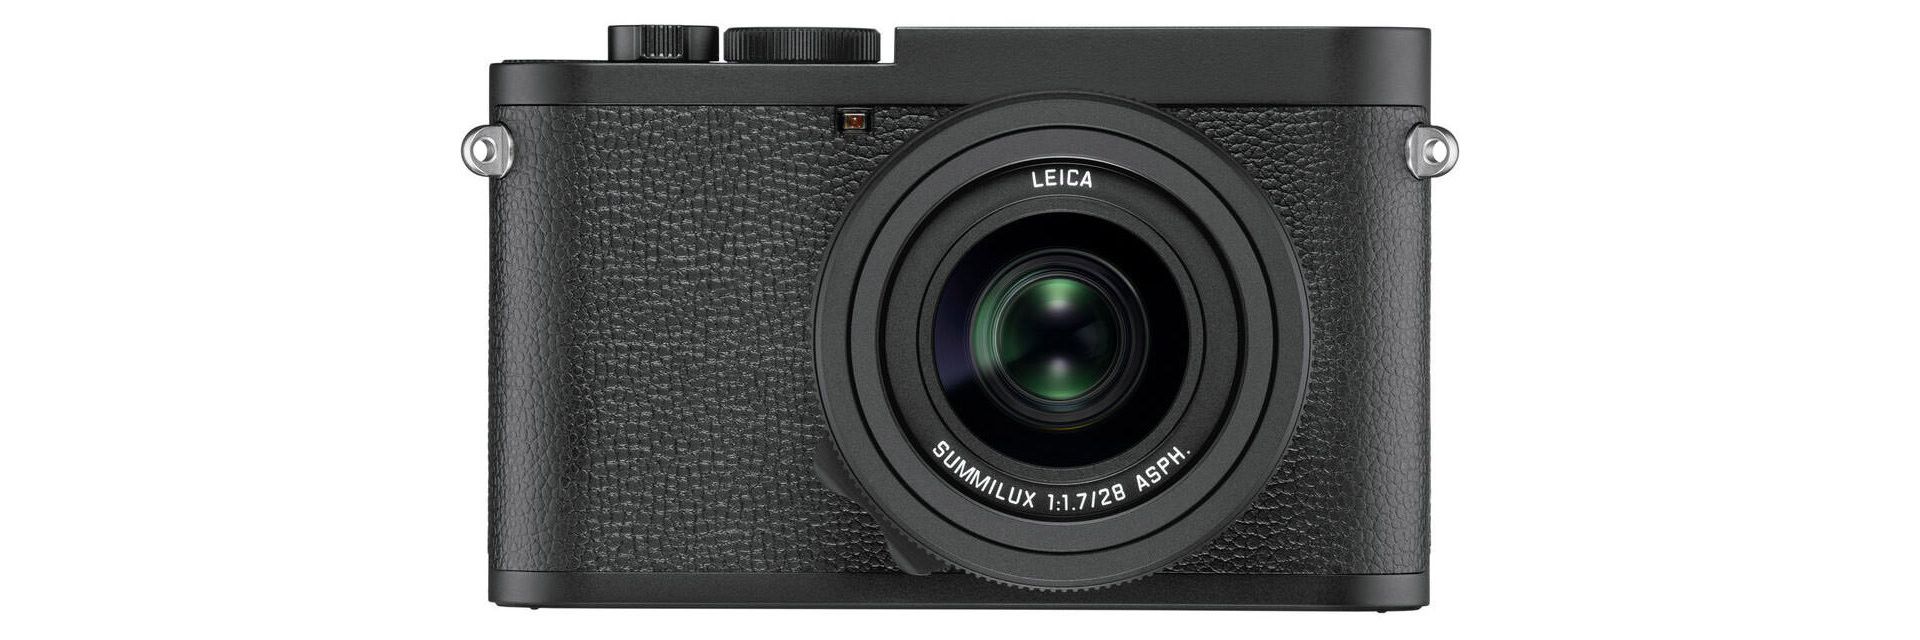 Leica Q2 Monochrom front panel